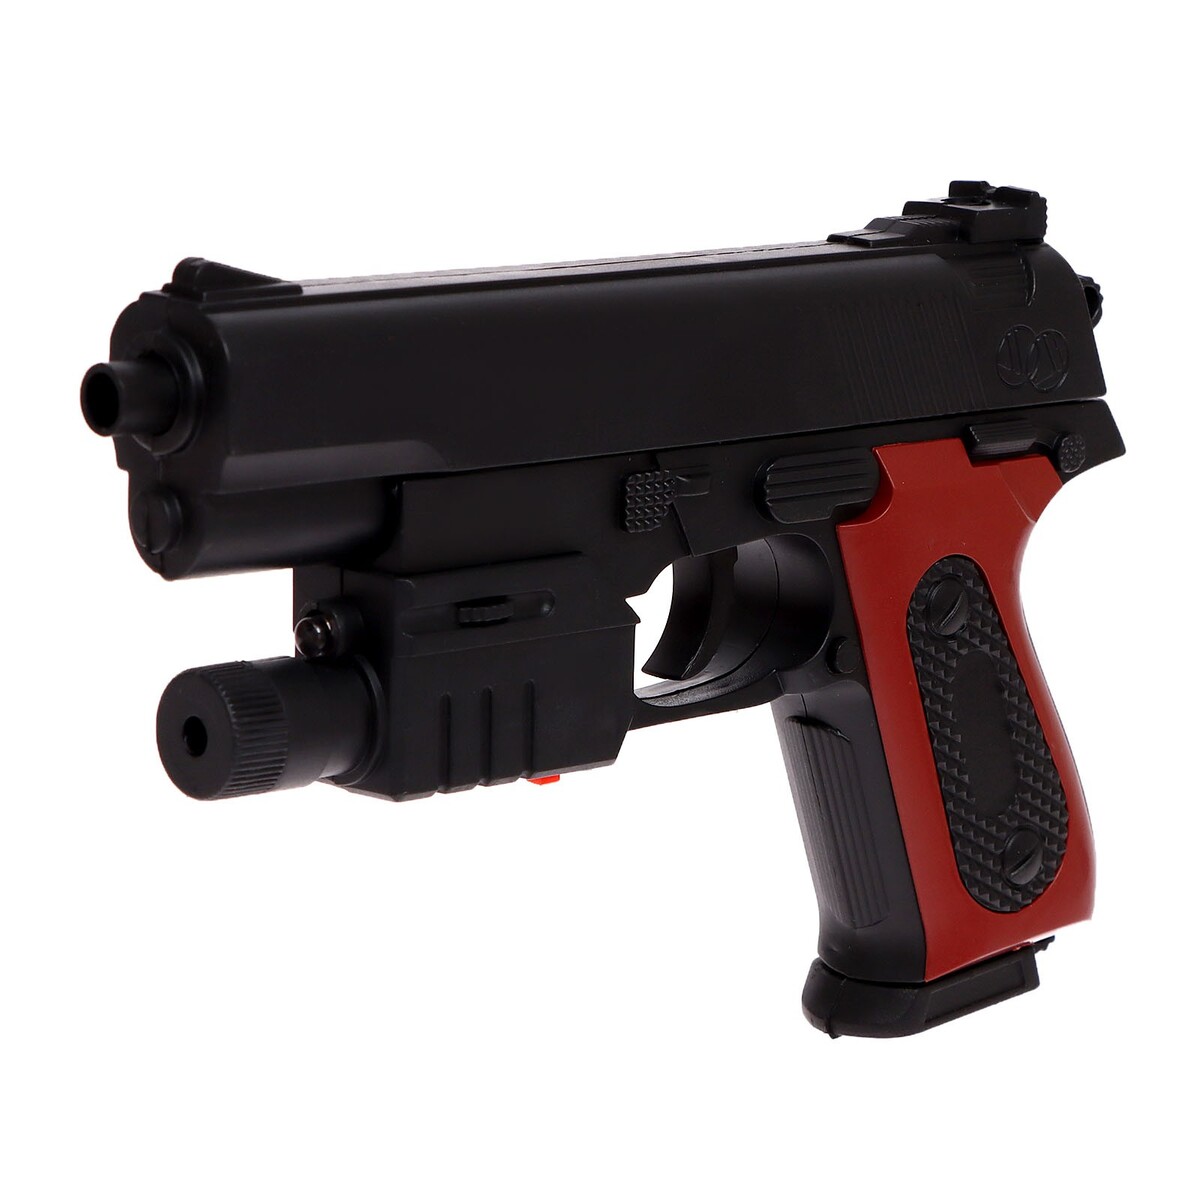 Пистолет пневматический детский пистолет пневматический 1b01580